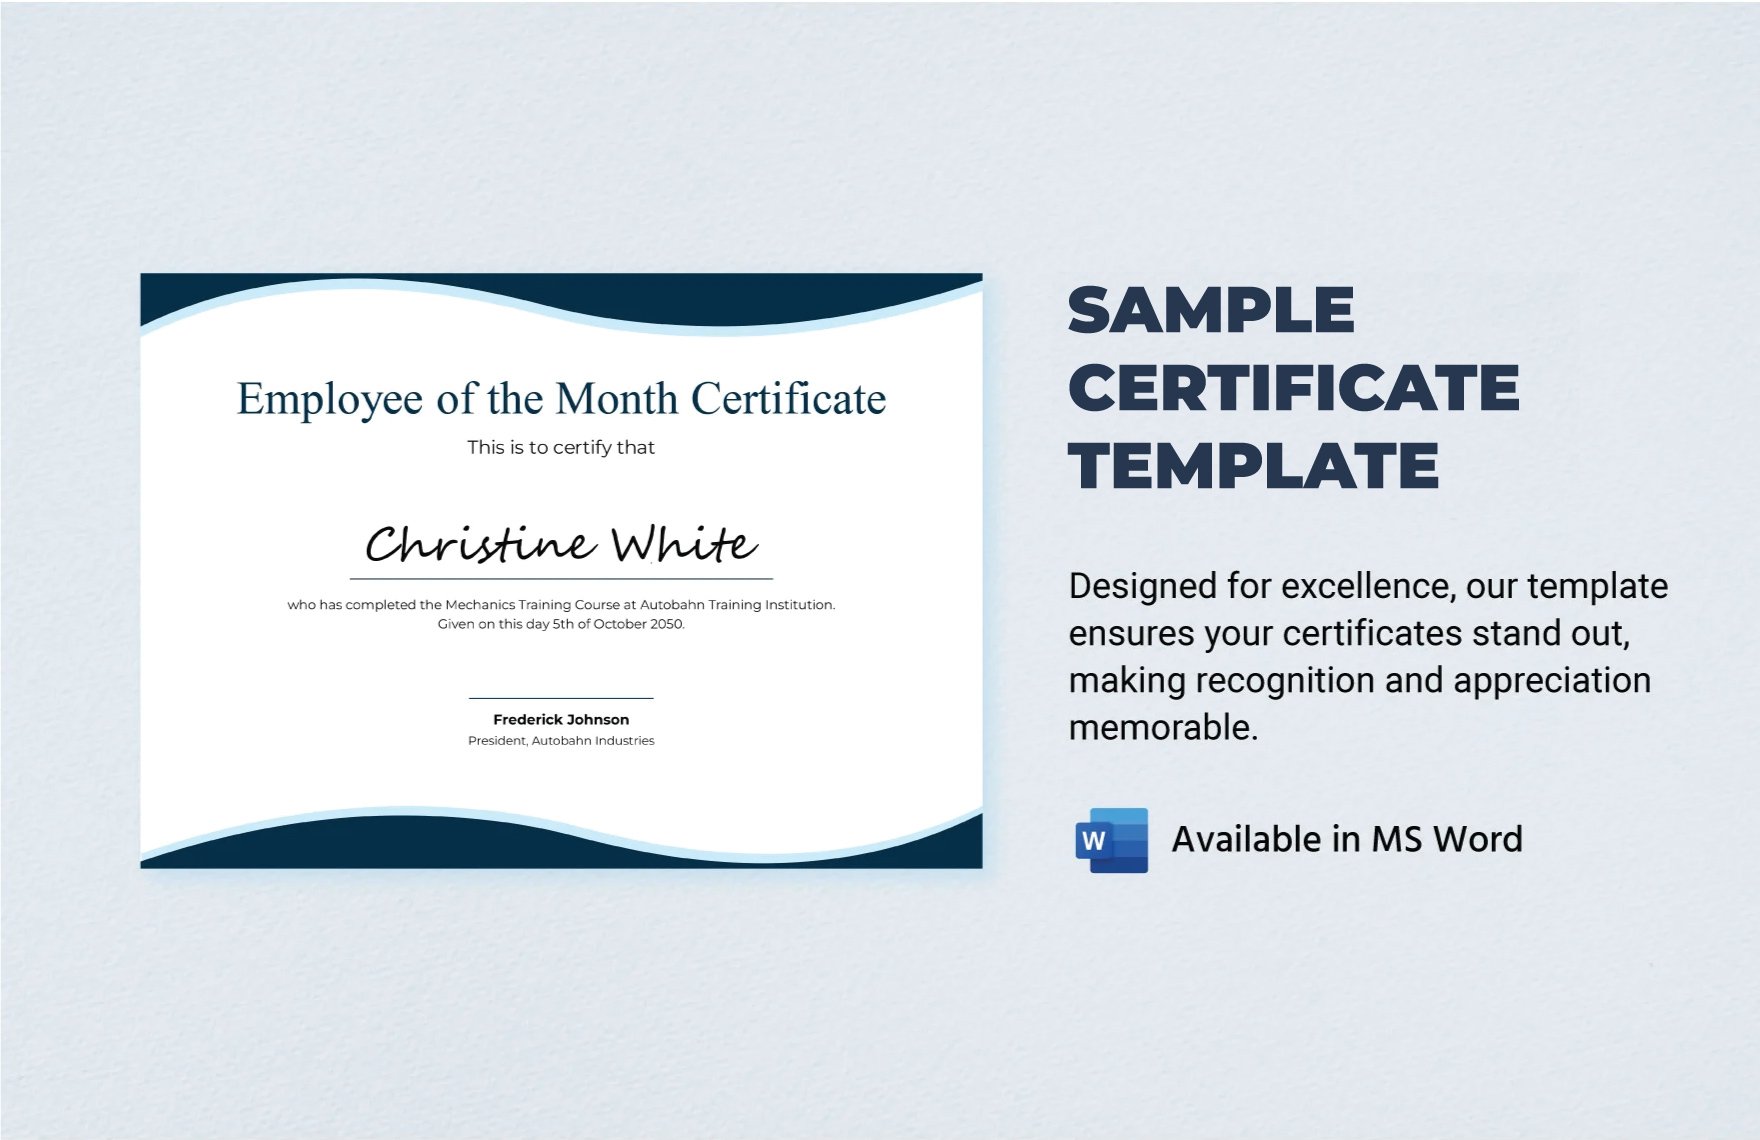 Sample Certificate Template in Word